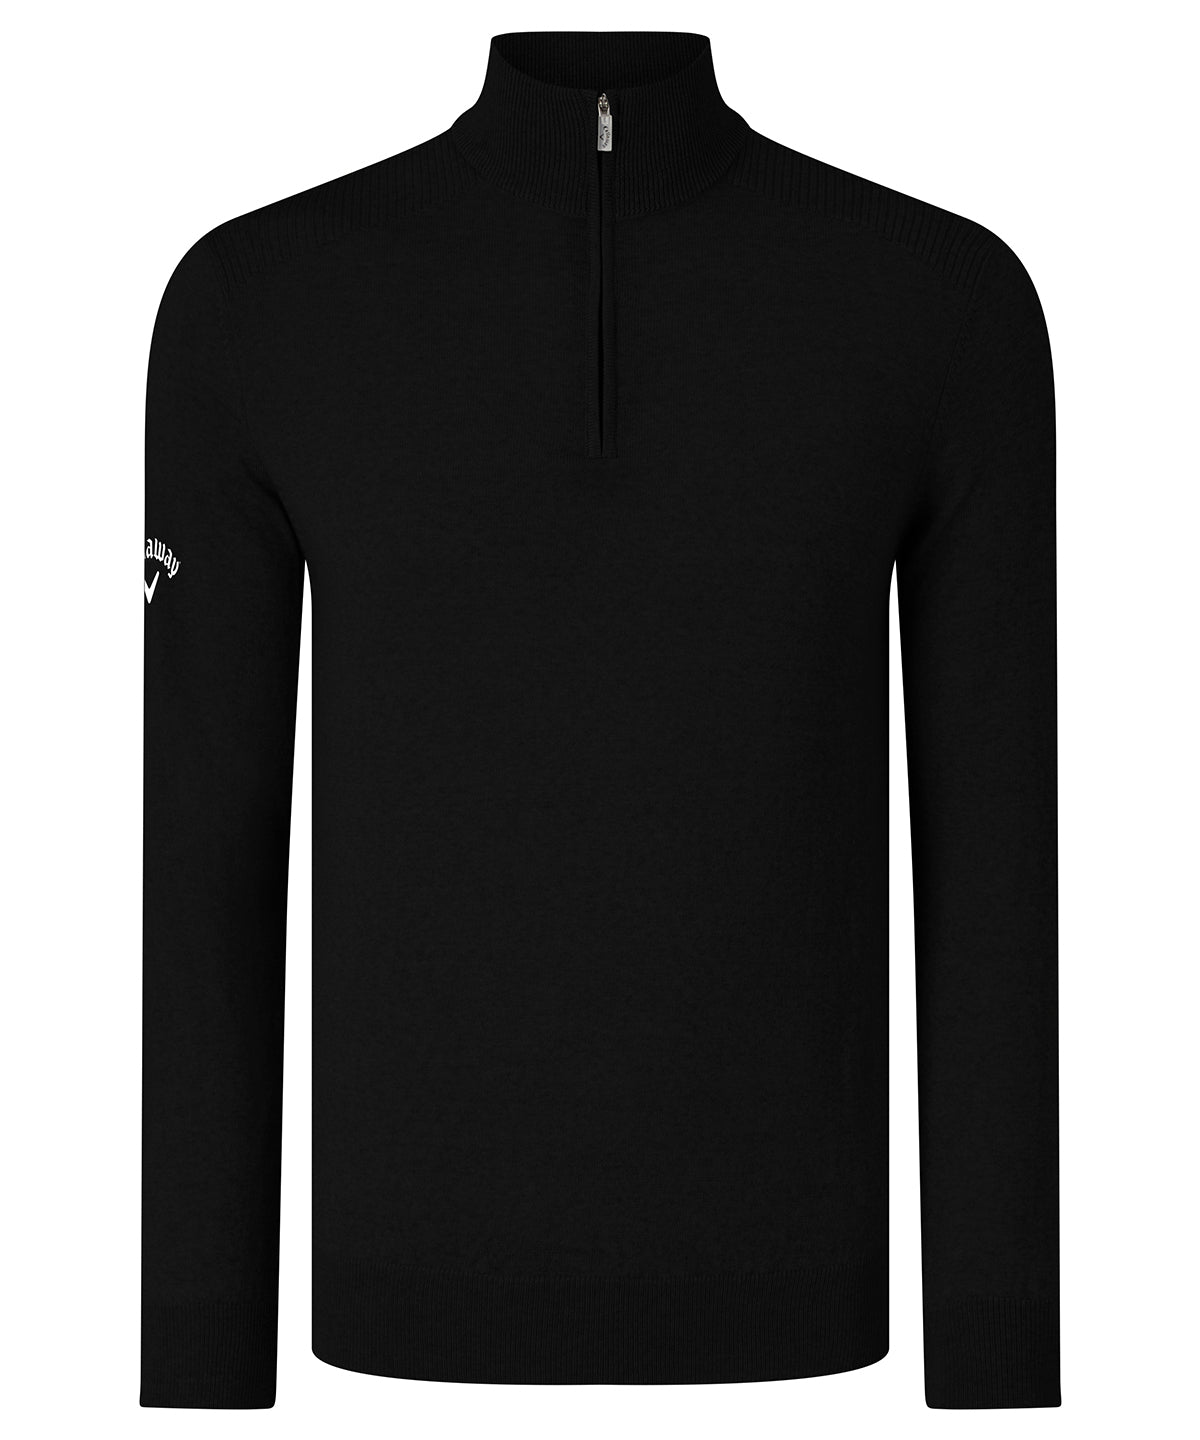 Personalised Knitted Jumpers - Black Callaway Ribbed ¼ zip Merino sweater